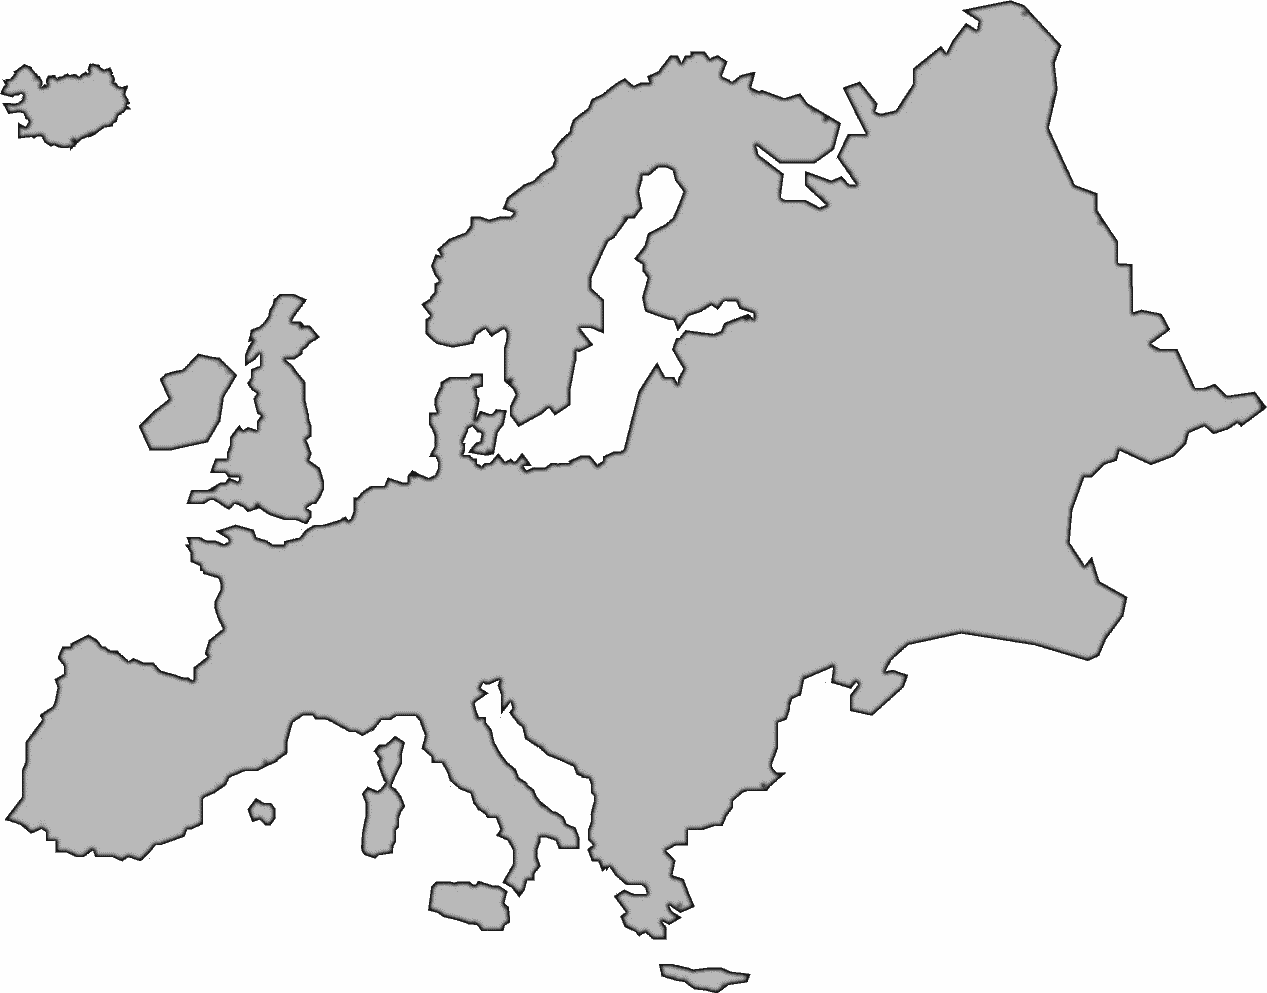 Europe large